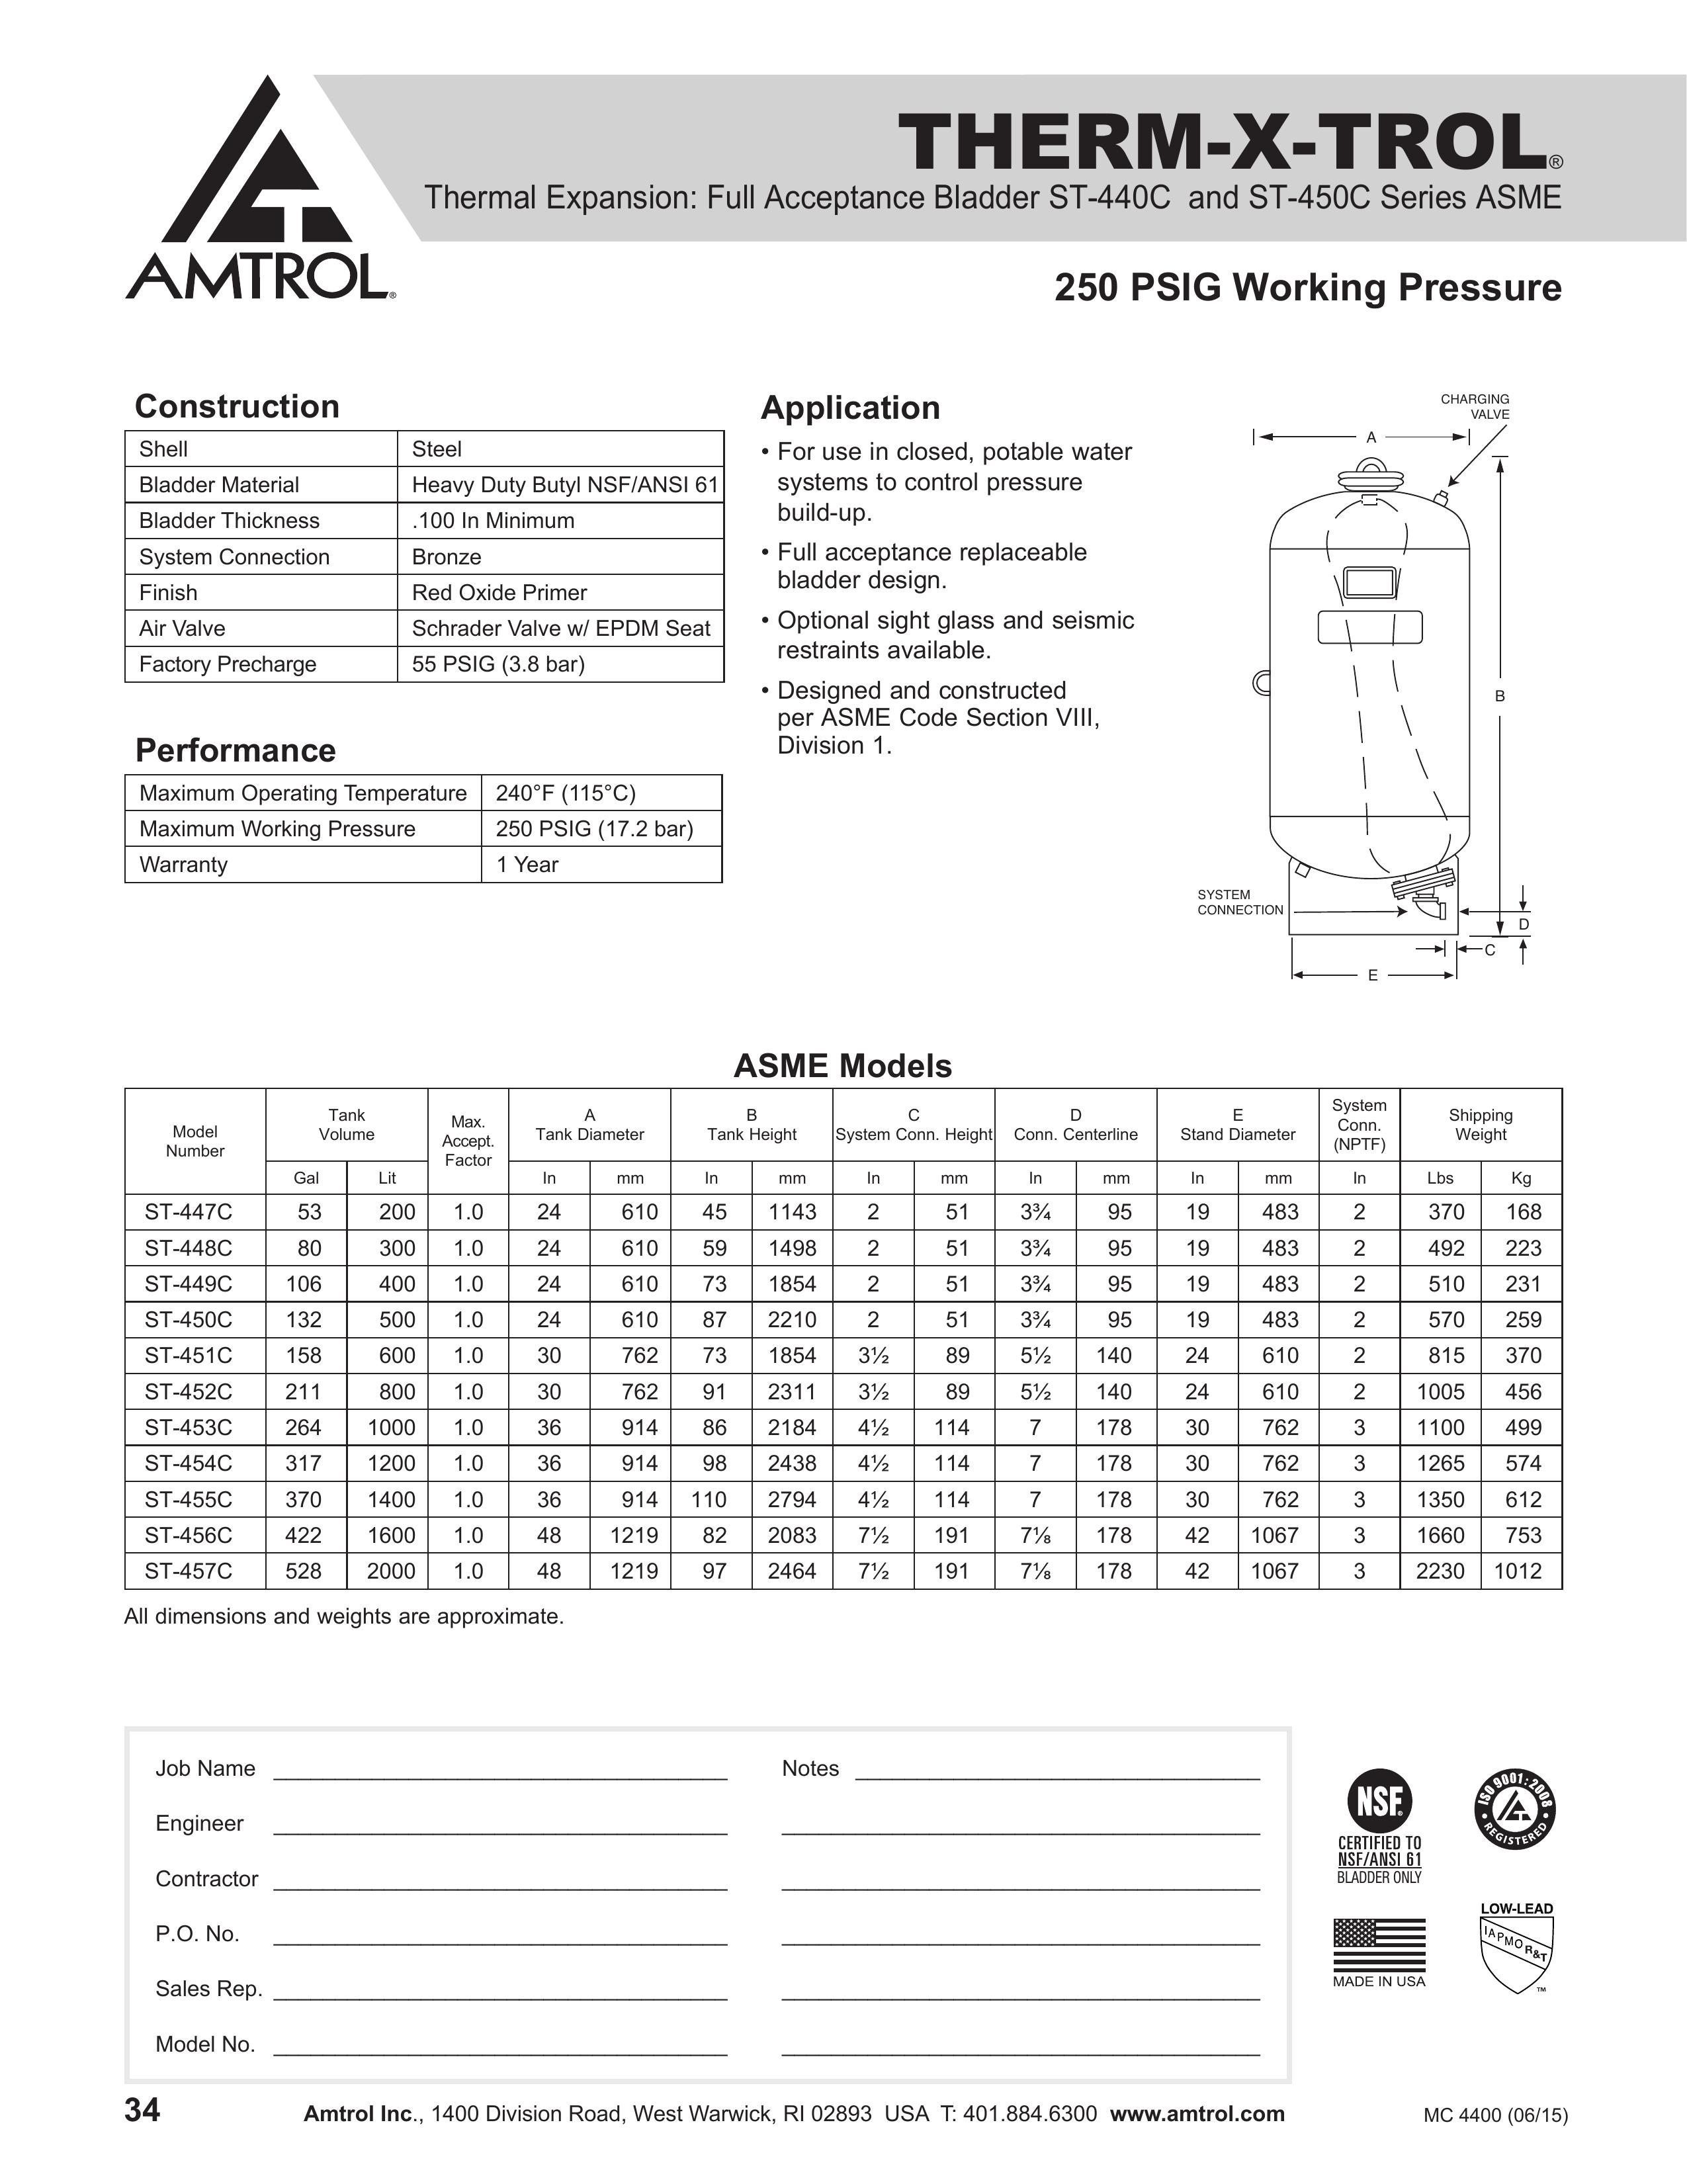 Amtrol ST-452C Slow Cooker User Manual